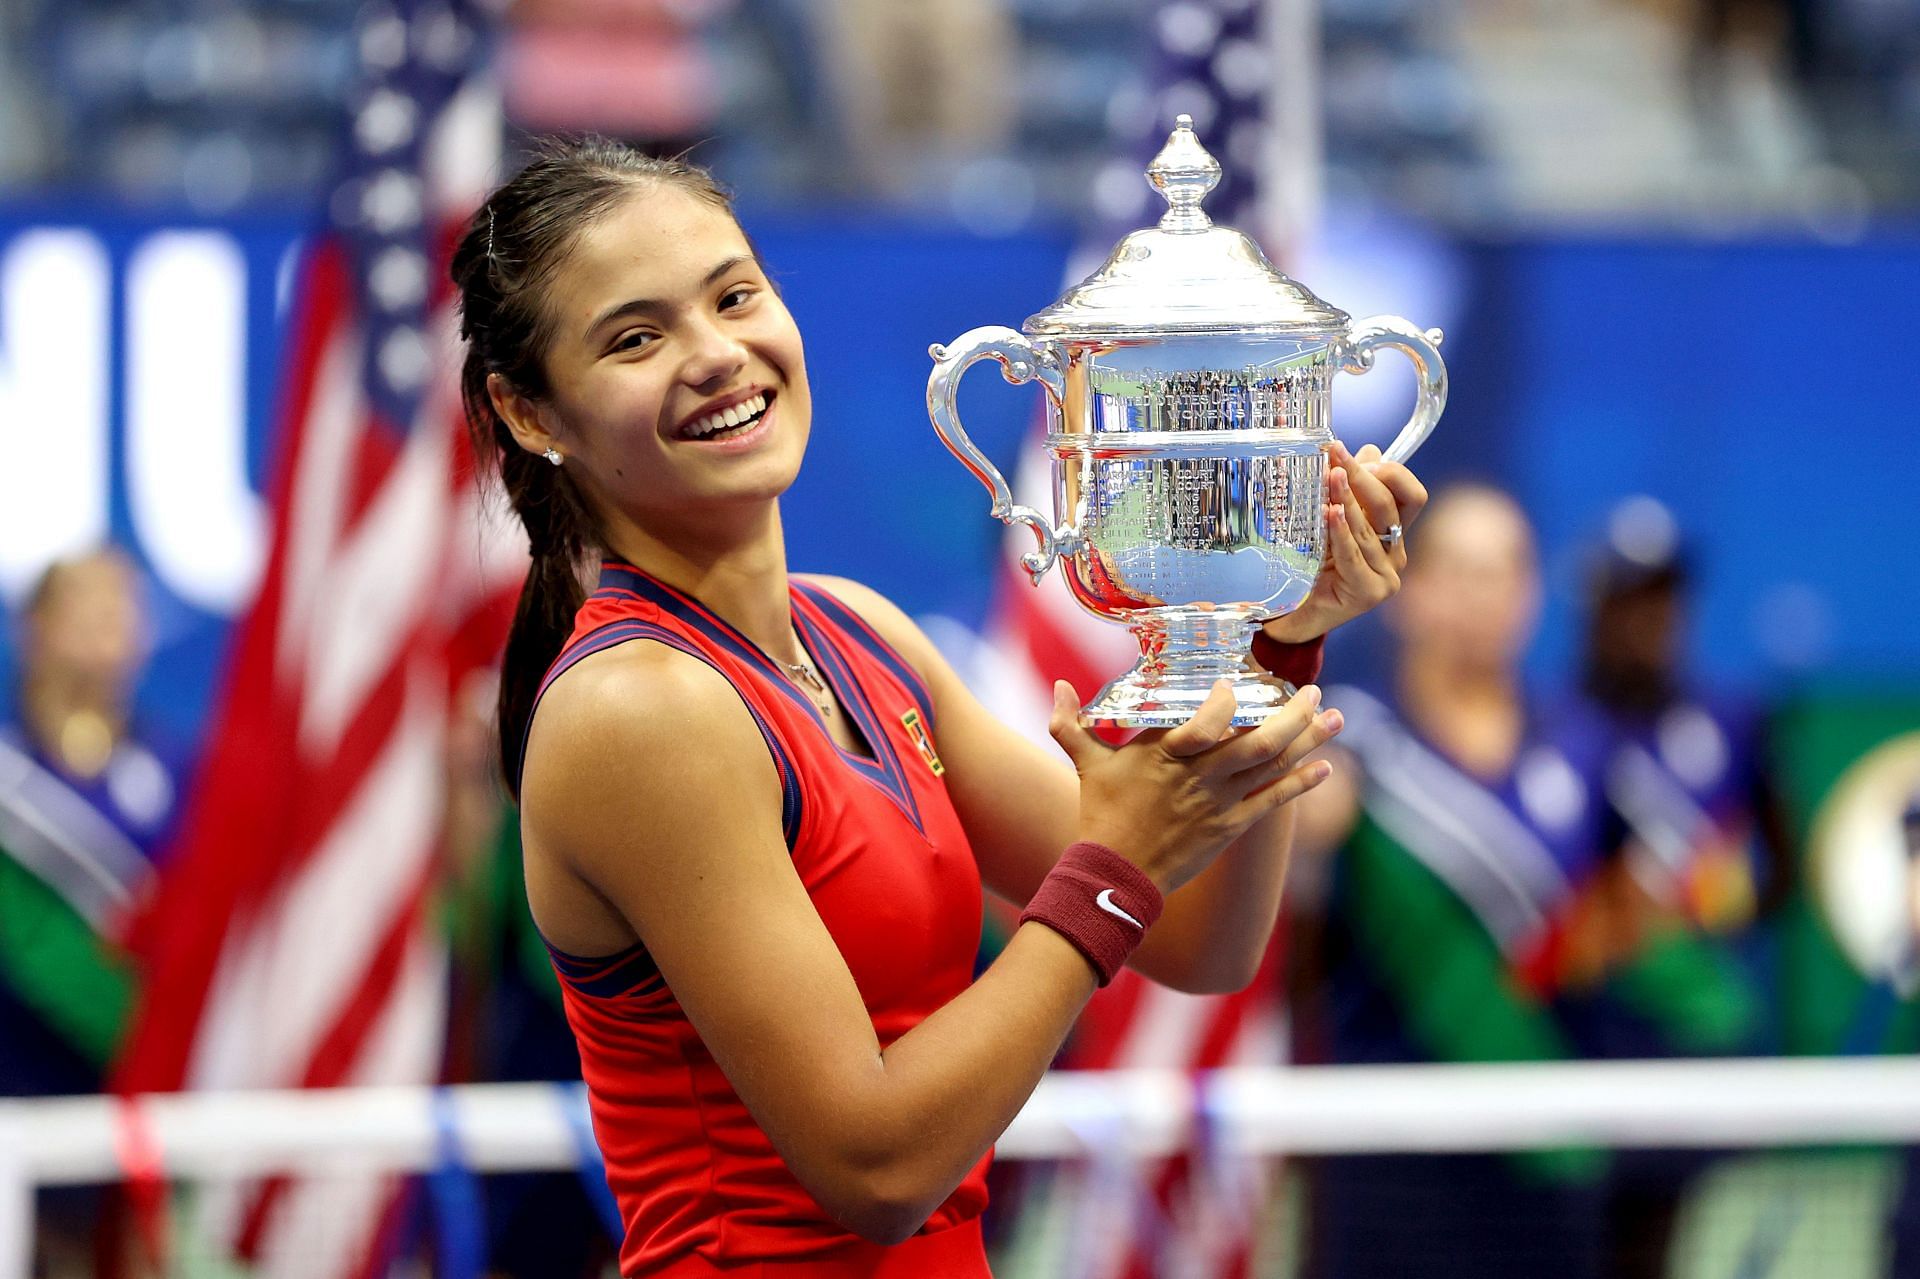 Emma Raducanu won the 2021 US Open